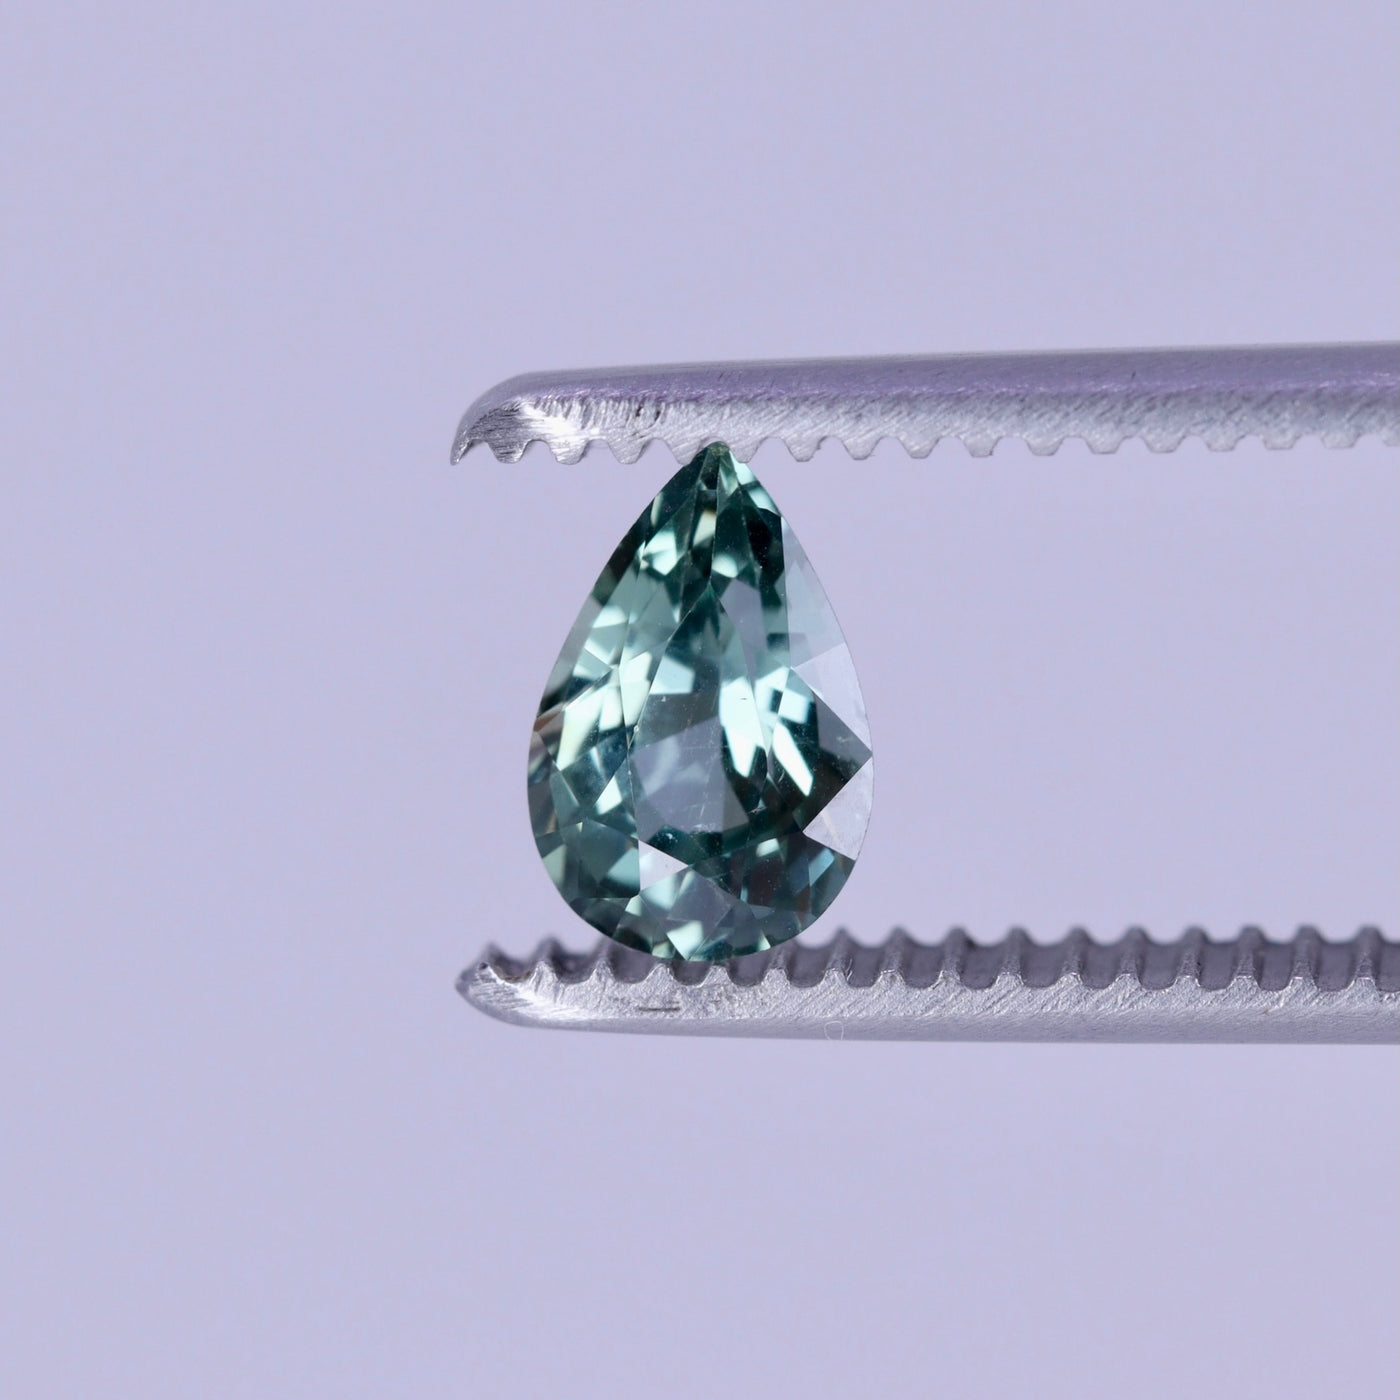 Teal Sapphire | 1.01ct Pear Cut, Loose Gemstone